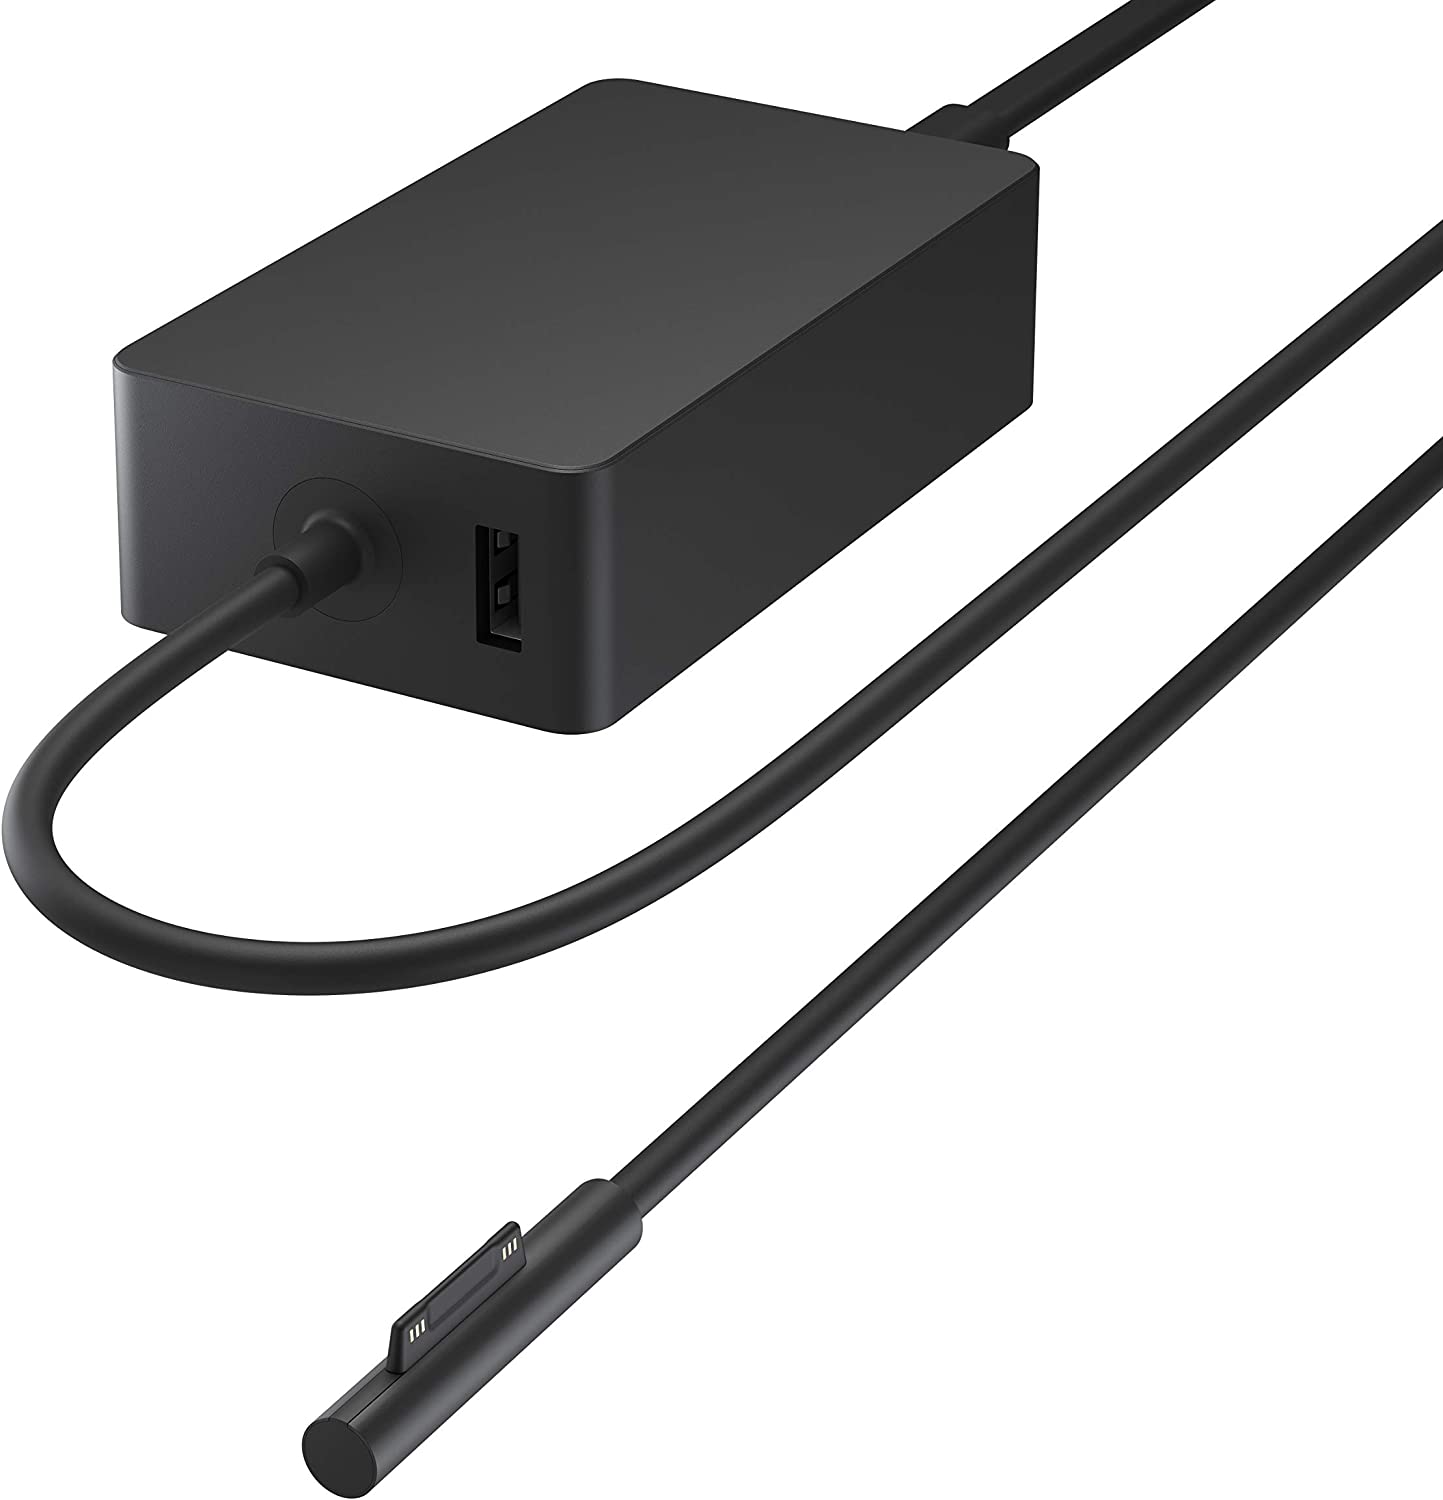 Microsoft - US7-00001 Surface 127W Power Supply - Black